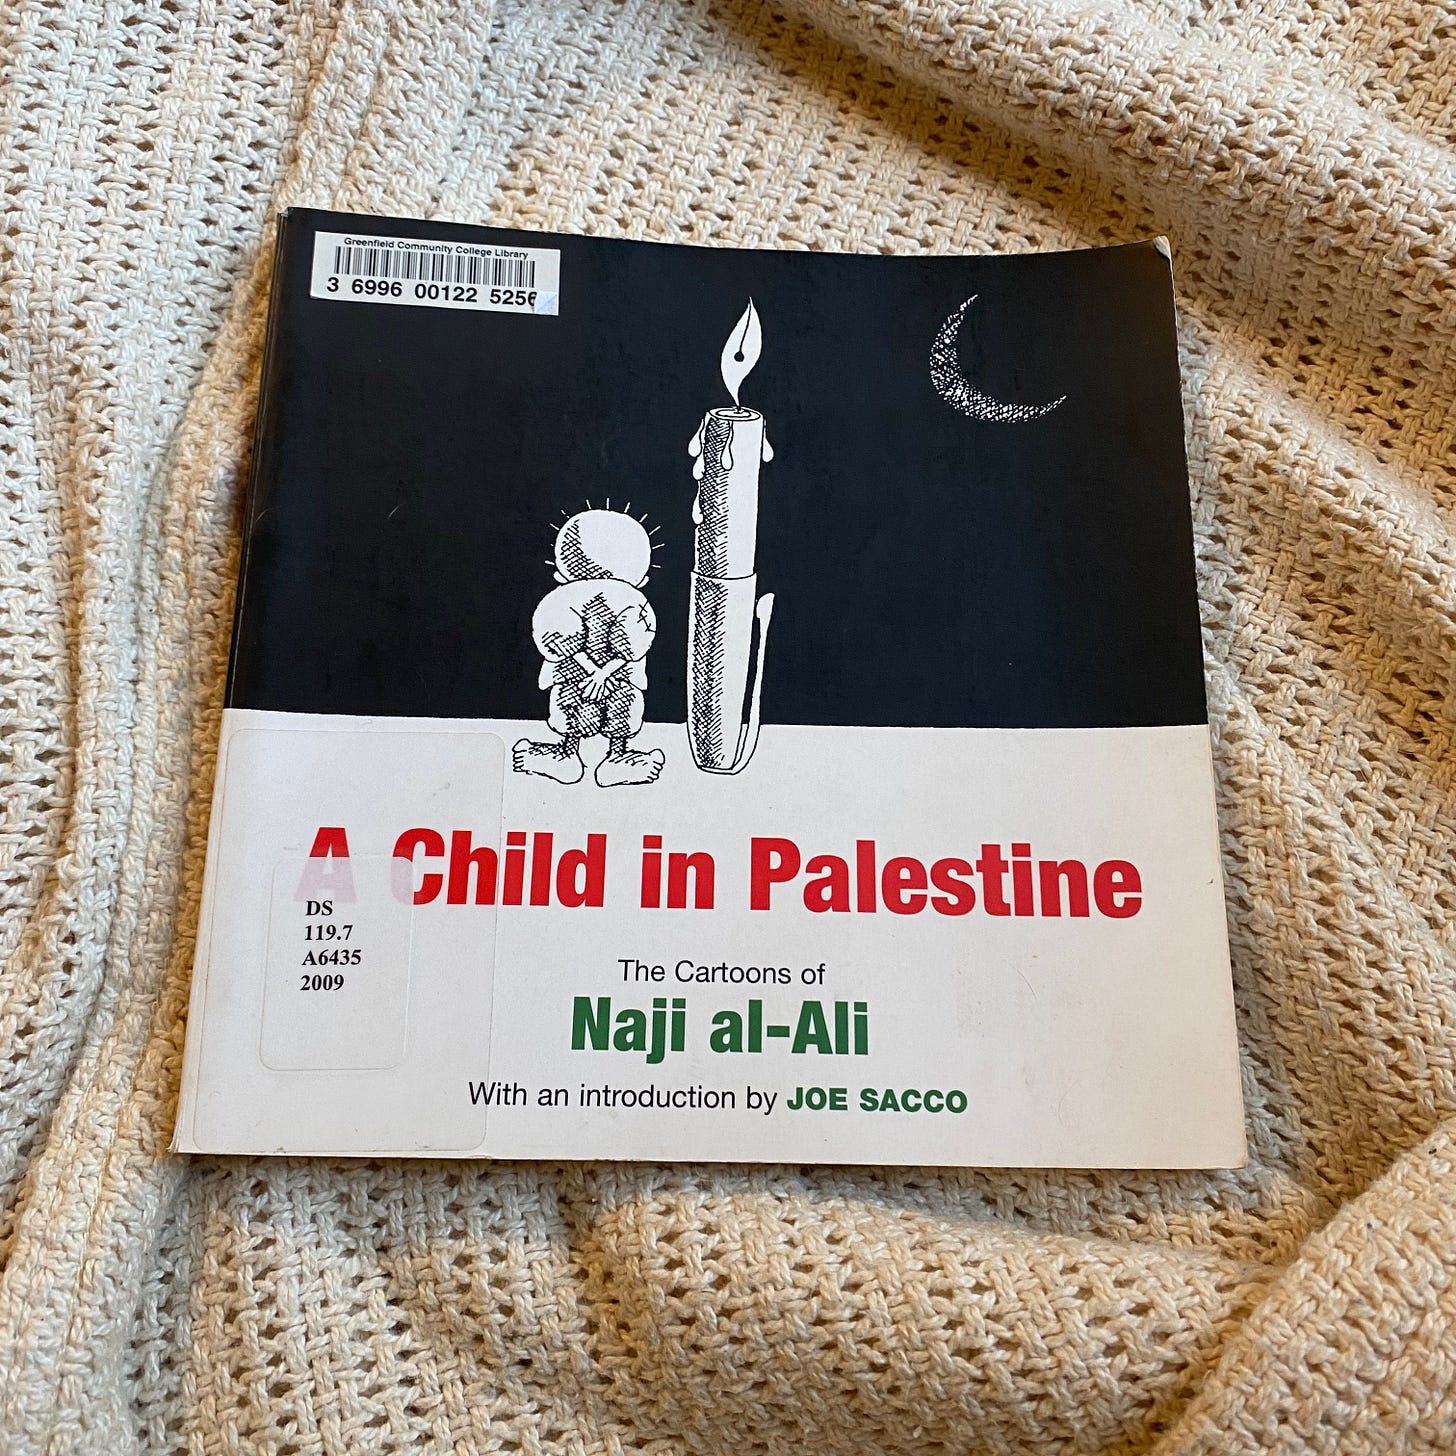 A Child in Palestine lies on a white blanket.